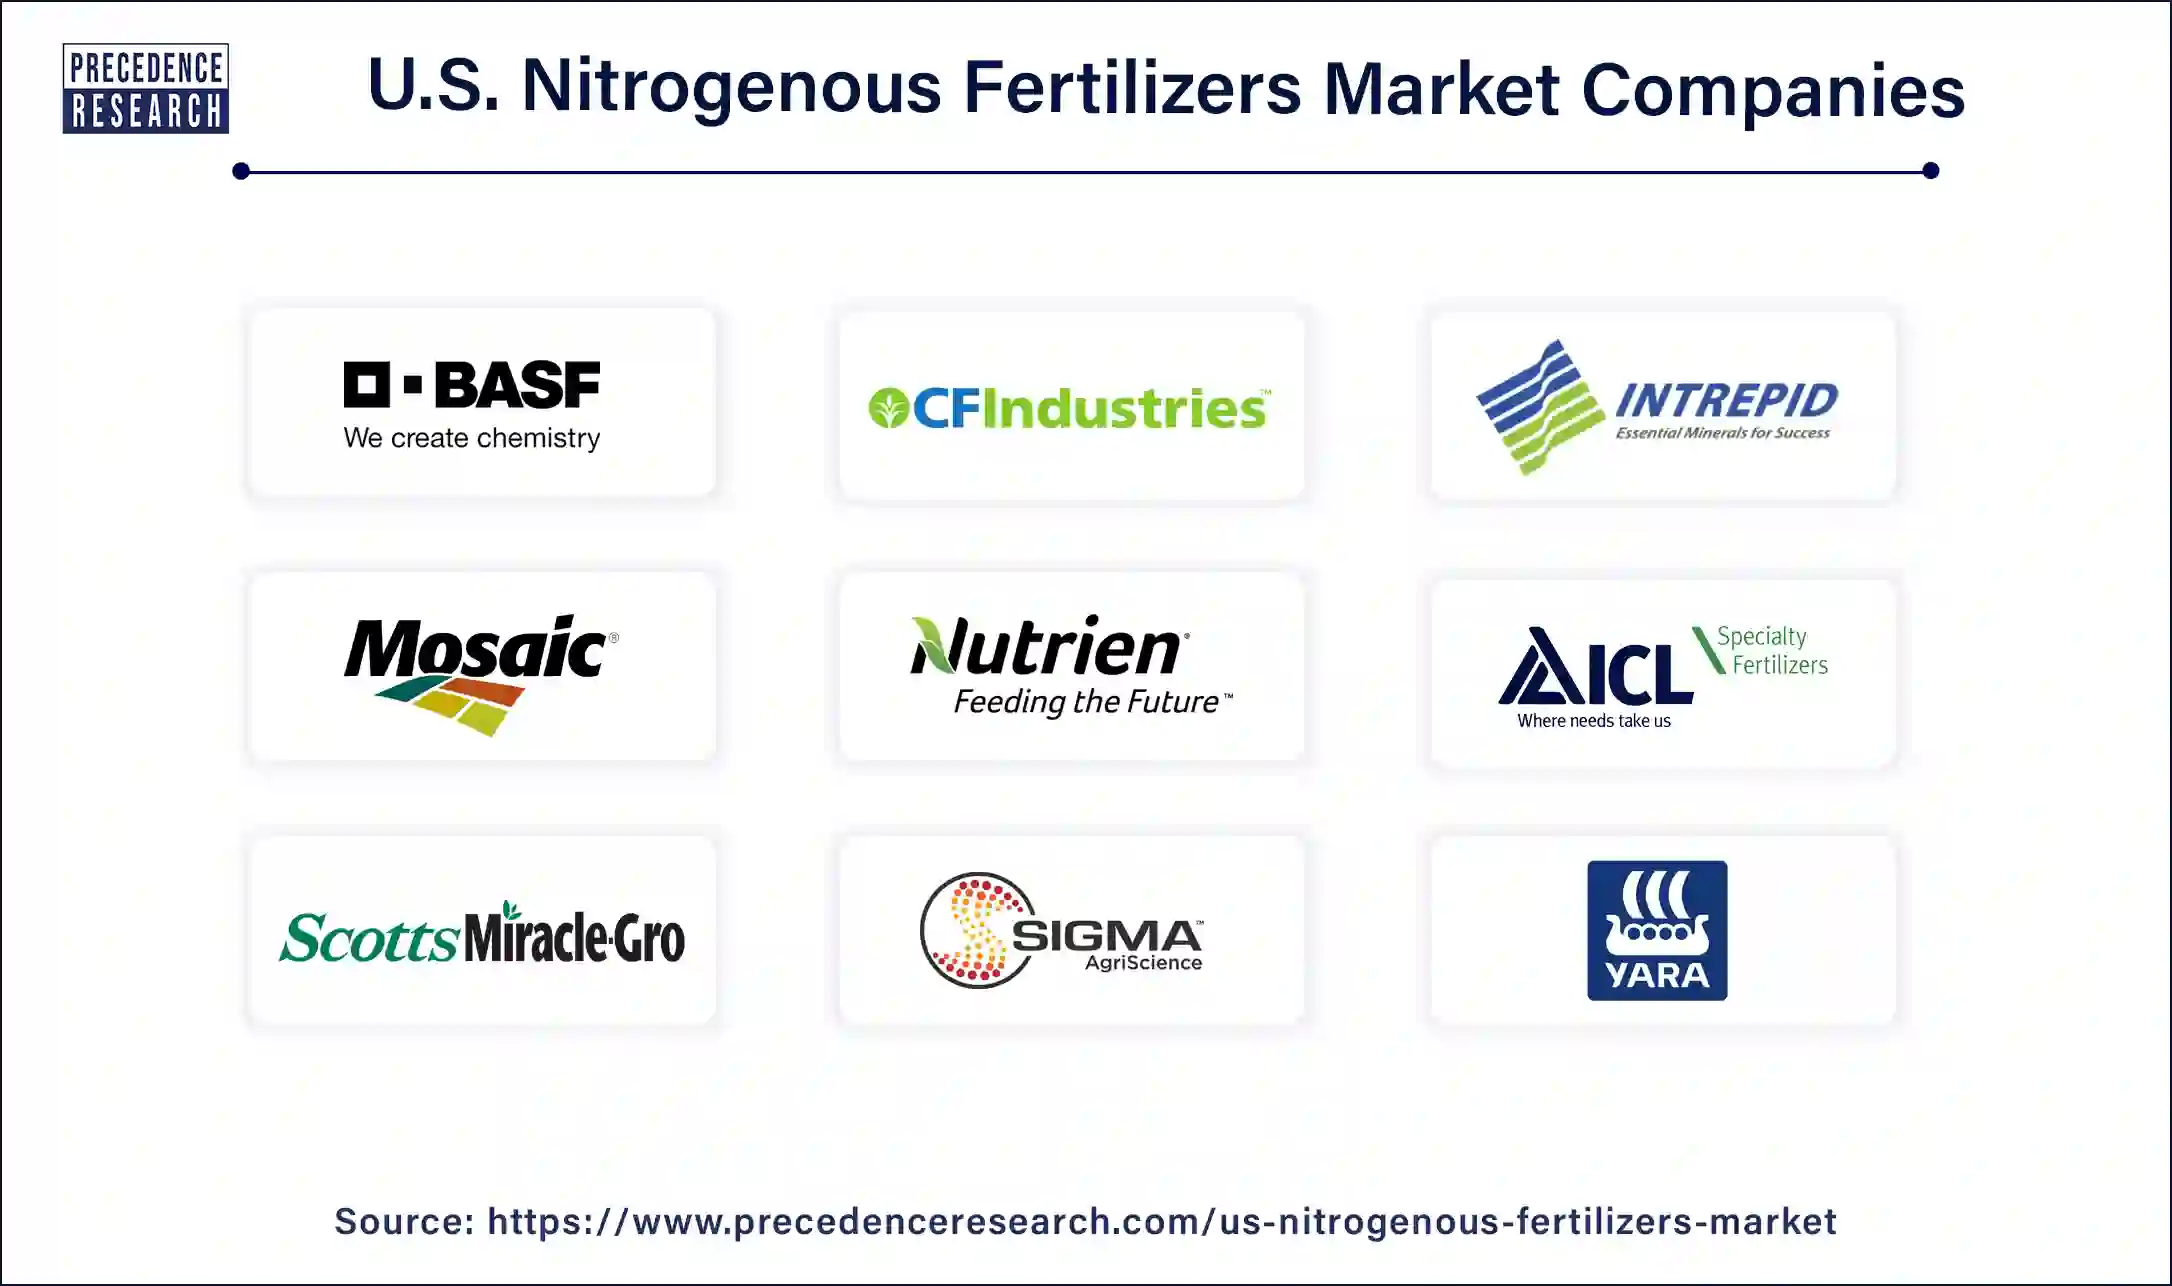 U.S. Nitrogenous Fertilizer Companies